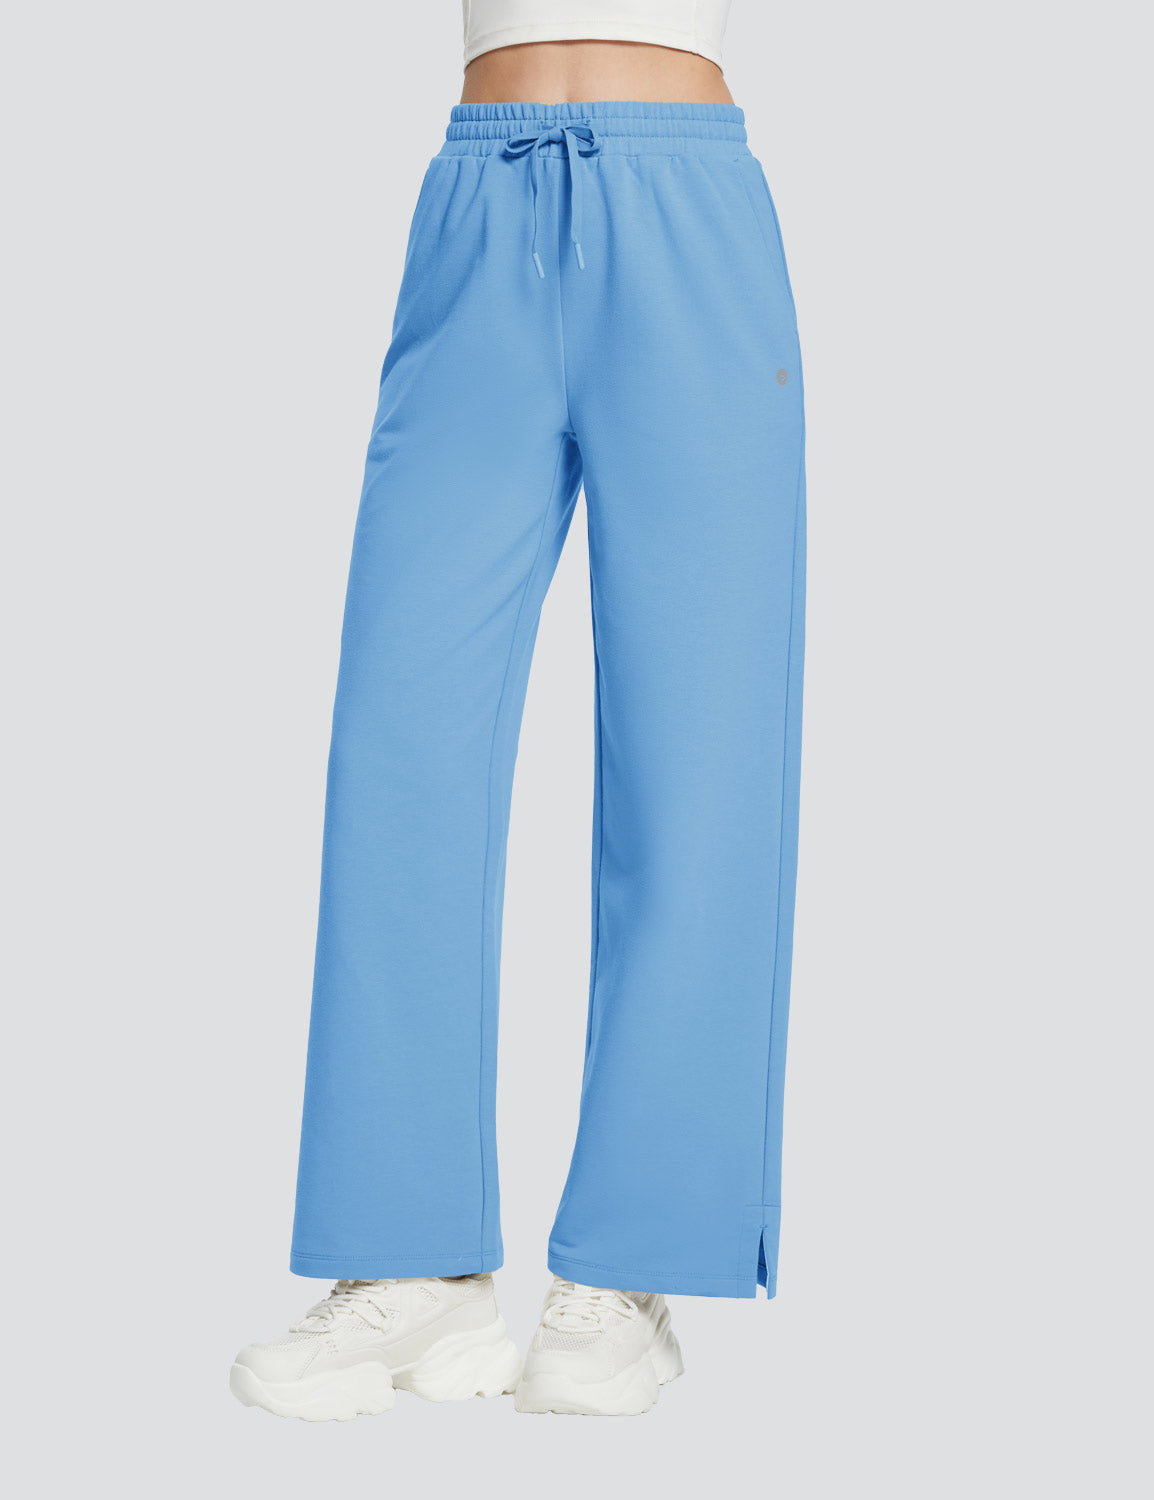 Baleaf Summer Trousers: sale at £9.99+